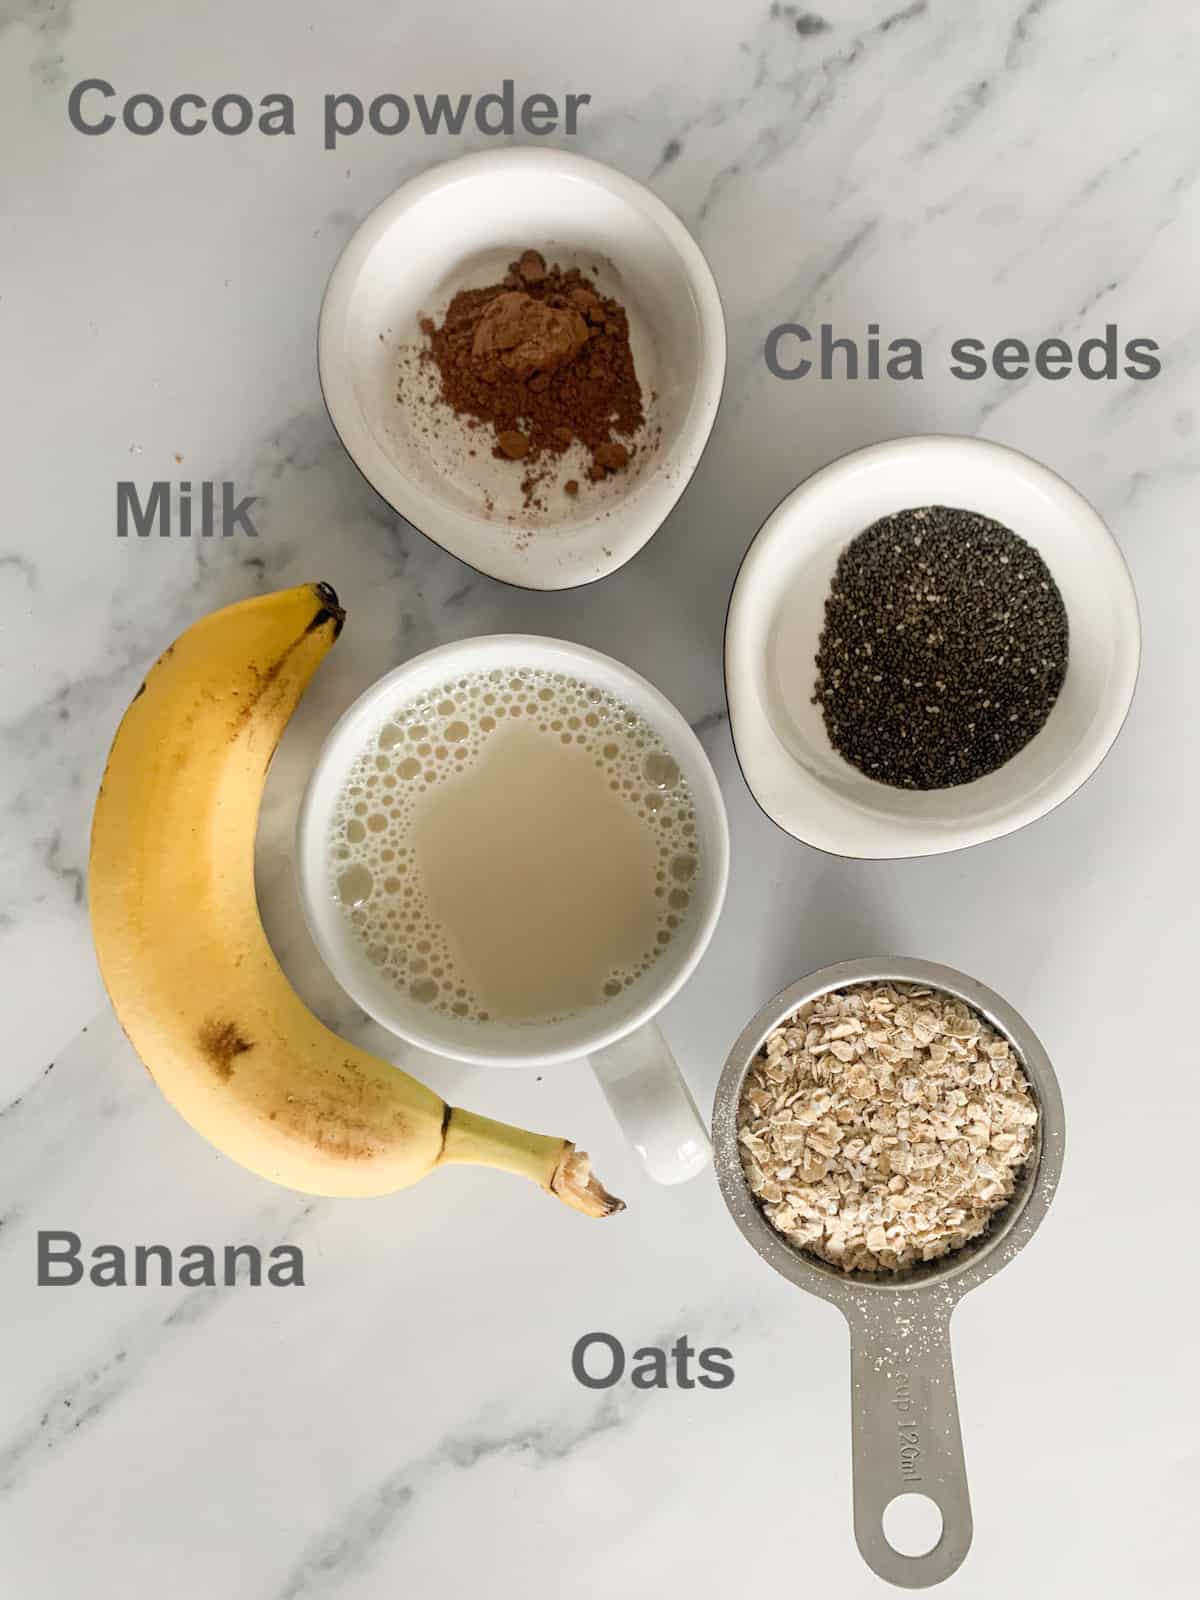 Ingredients: milk, banana, chia seeds, cocoa powder, oats 